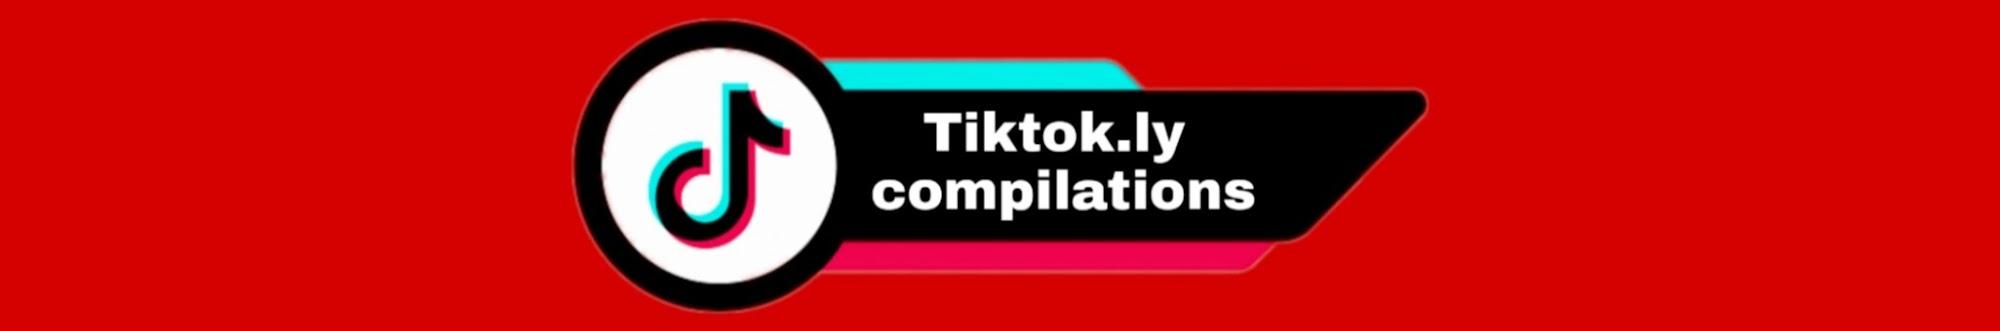 Tiktokly Compilations